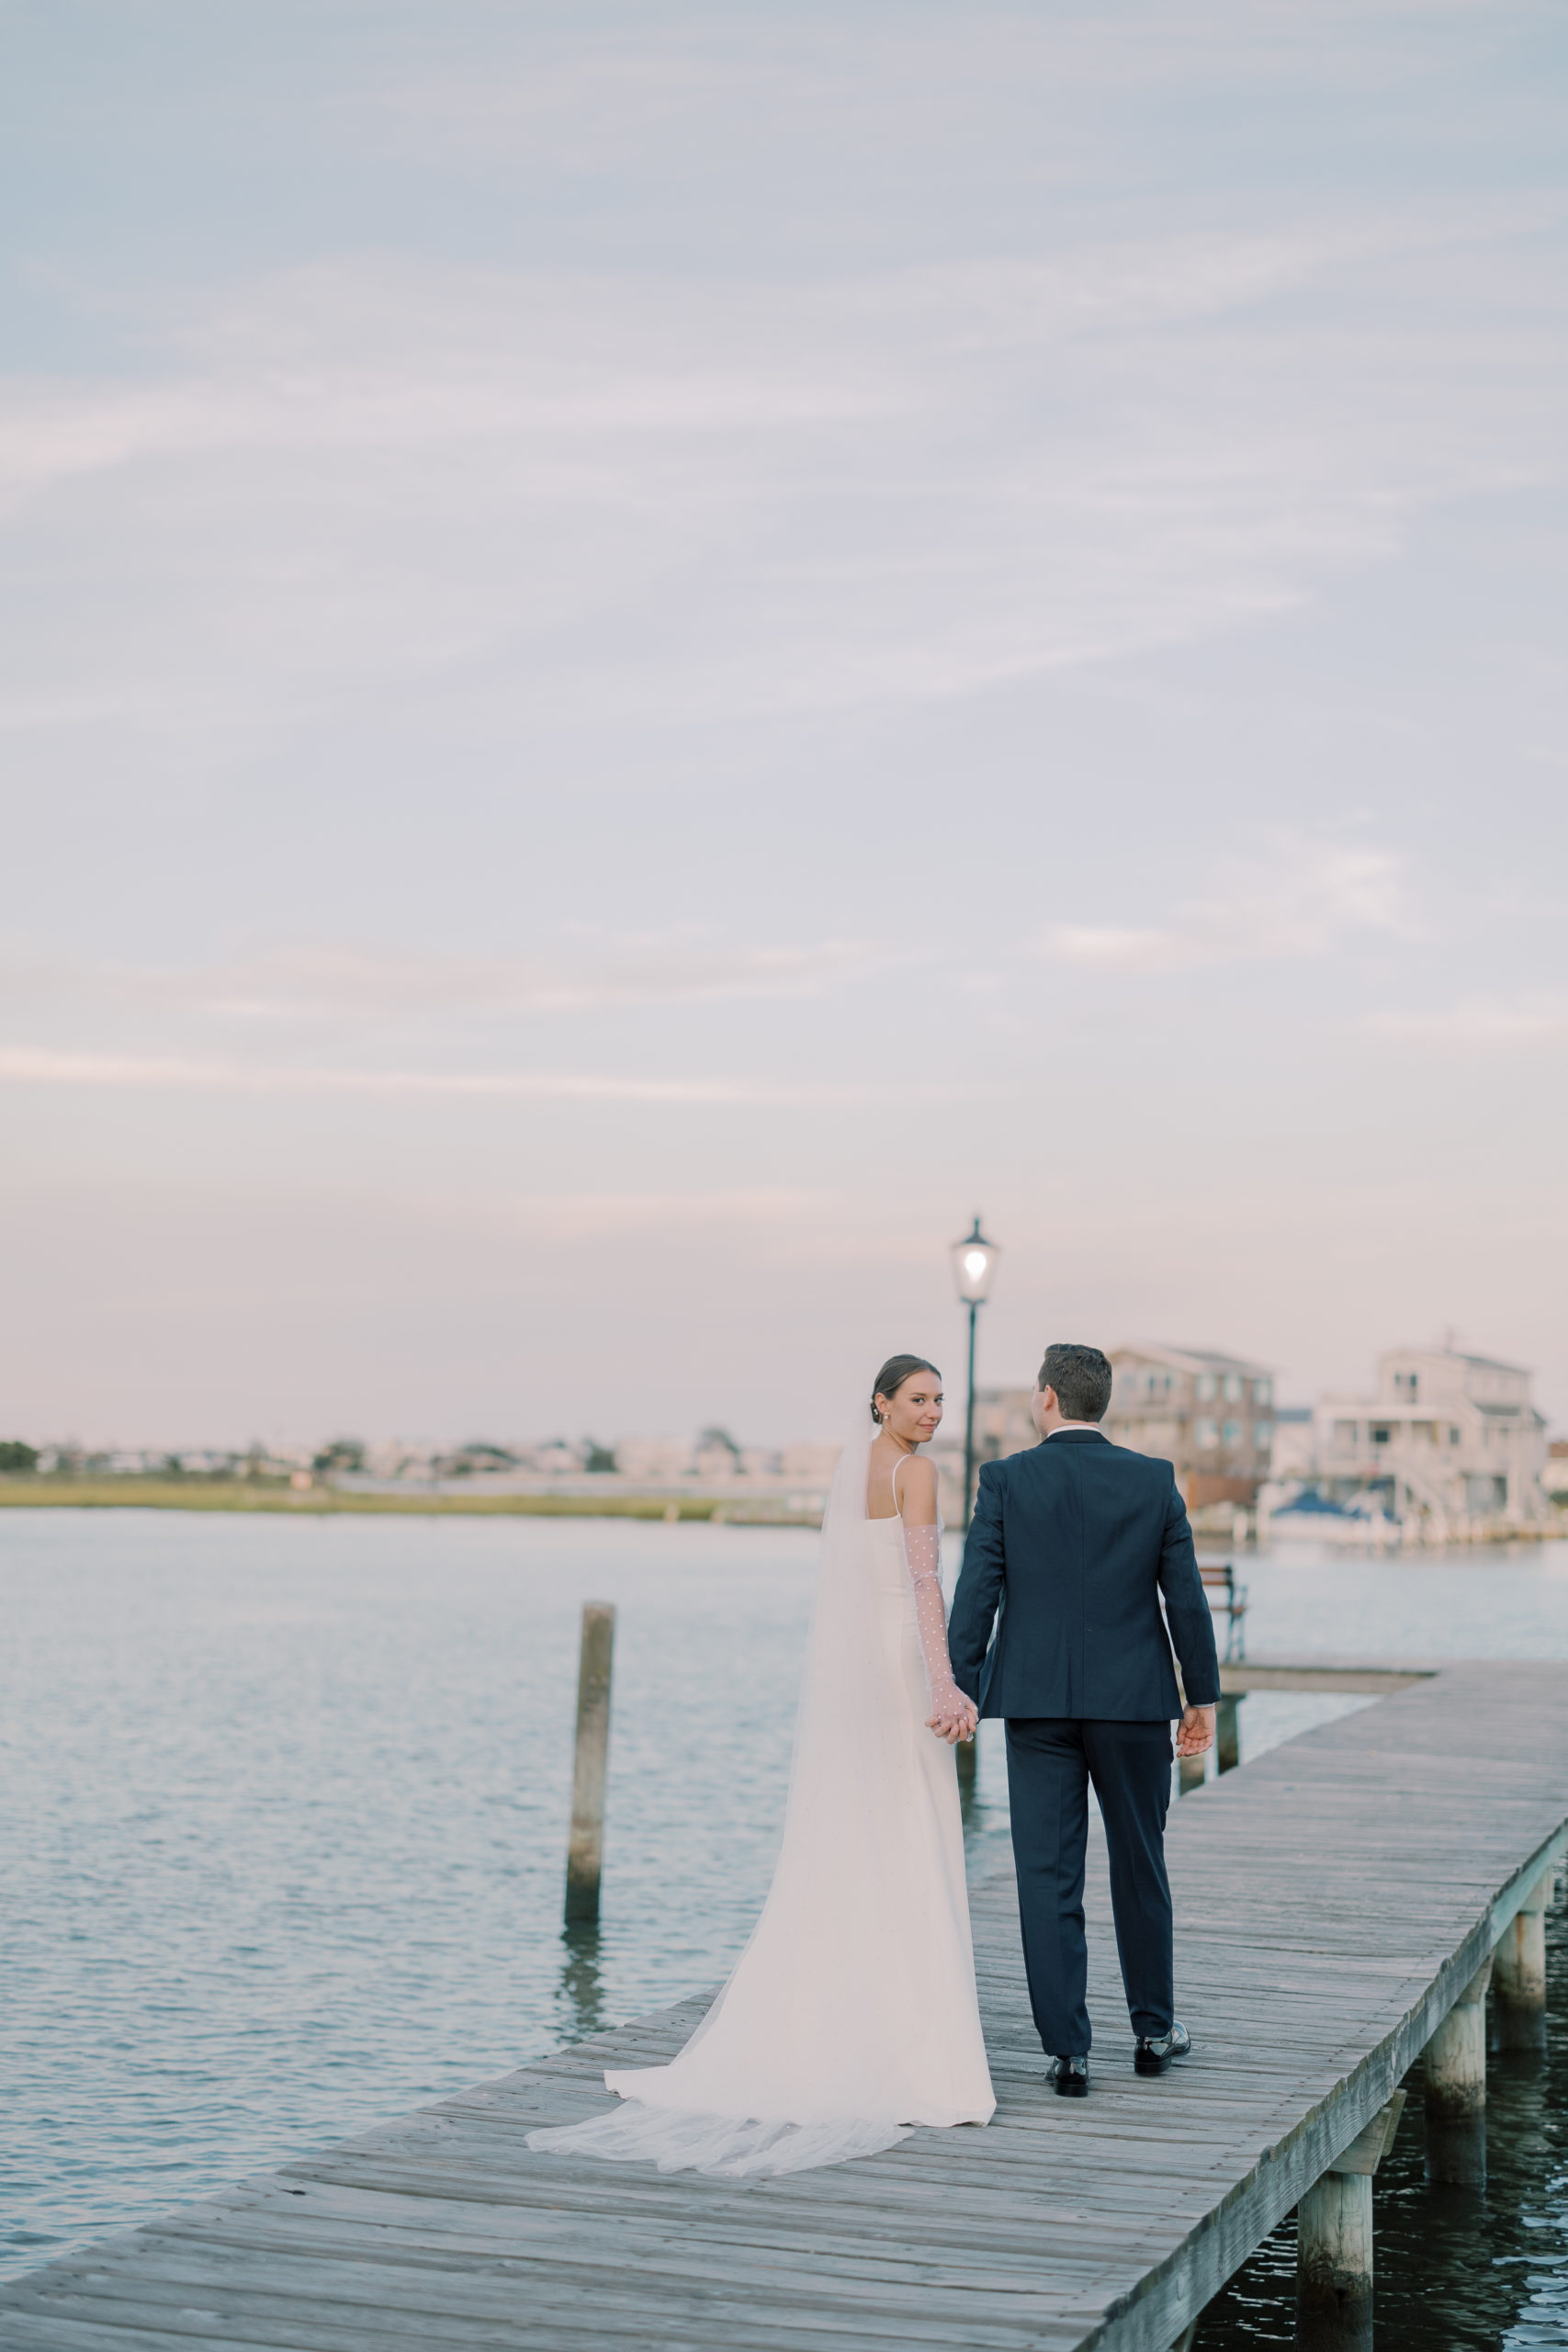 Do You Need Two Wedding Photographers On Your Wedding Day?